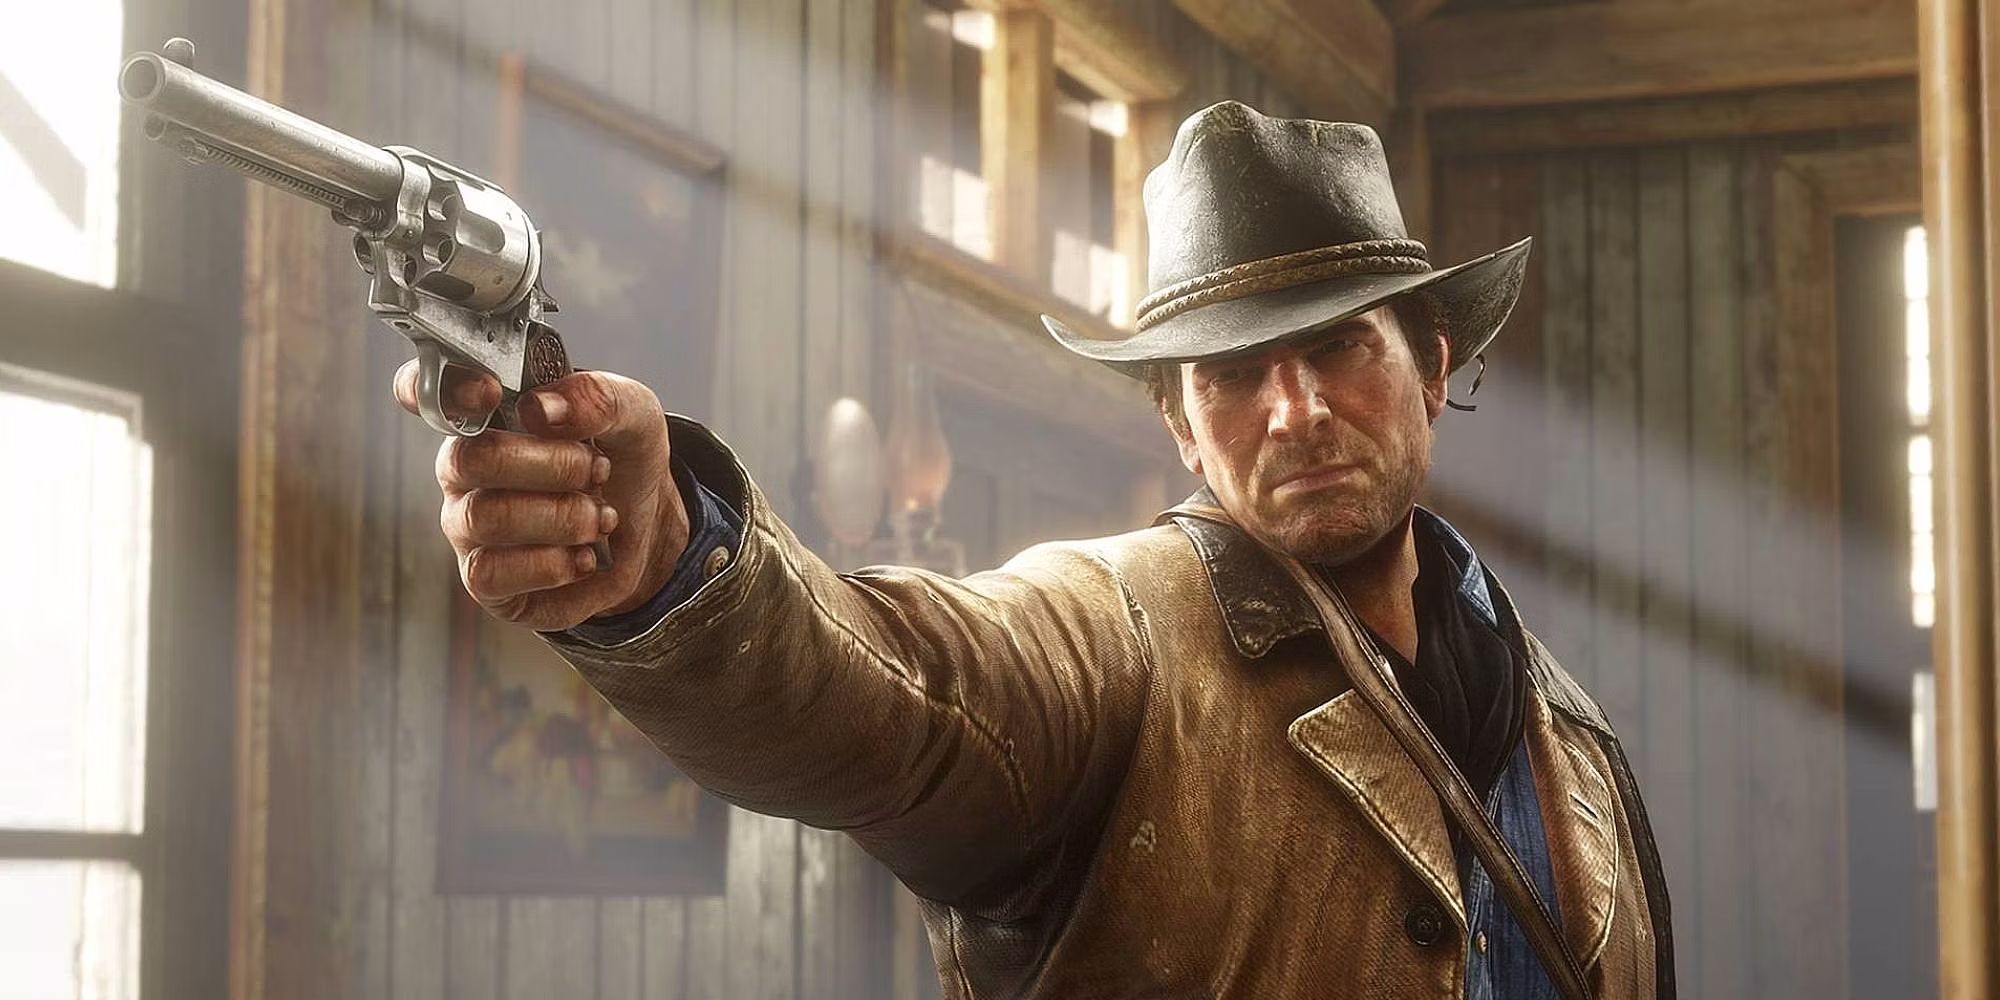 Arthur Morgan aiming his gun in Red Dead Redemption 2